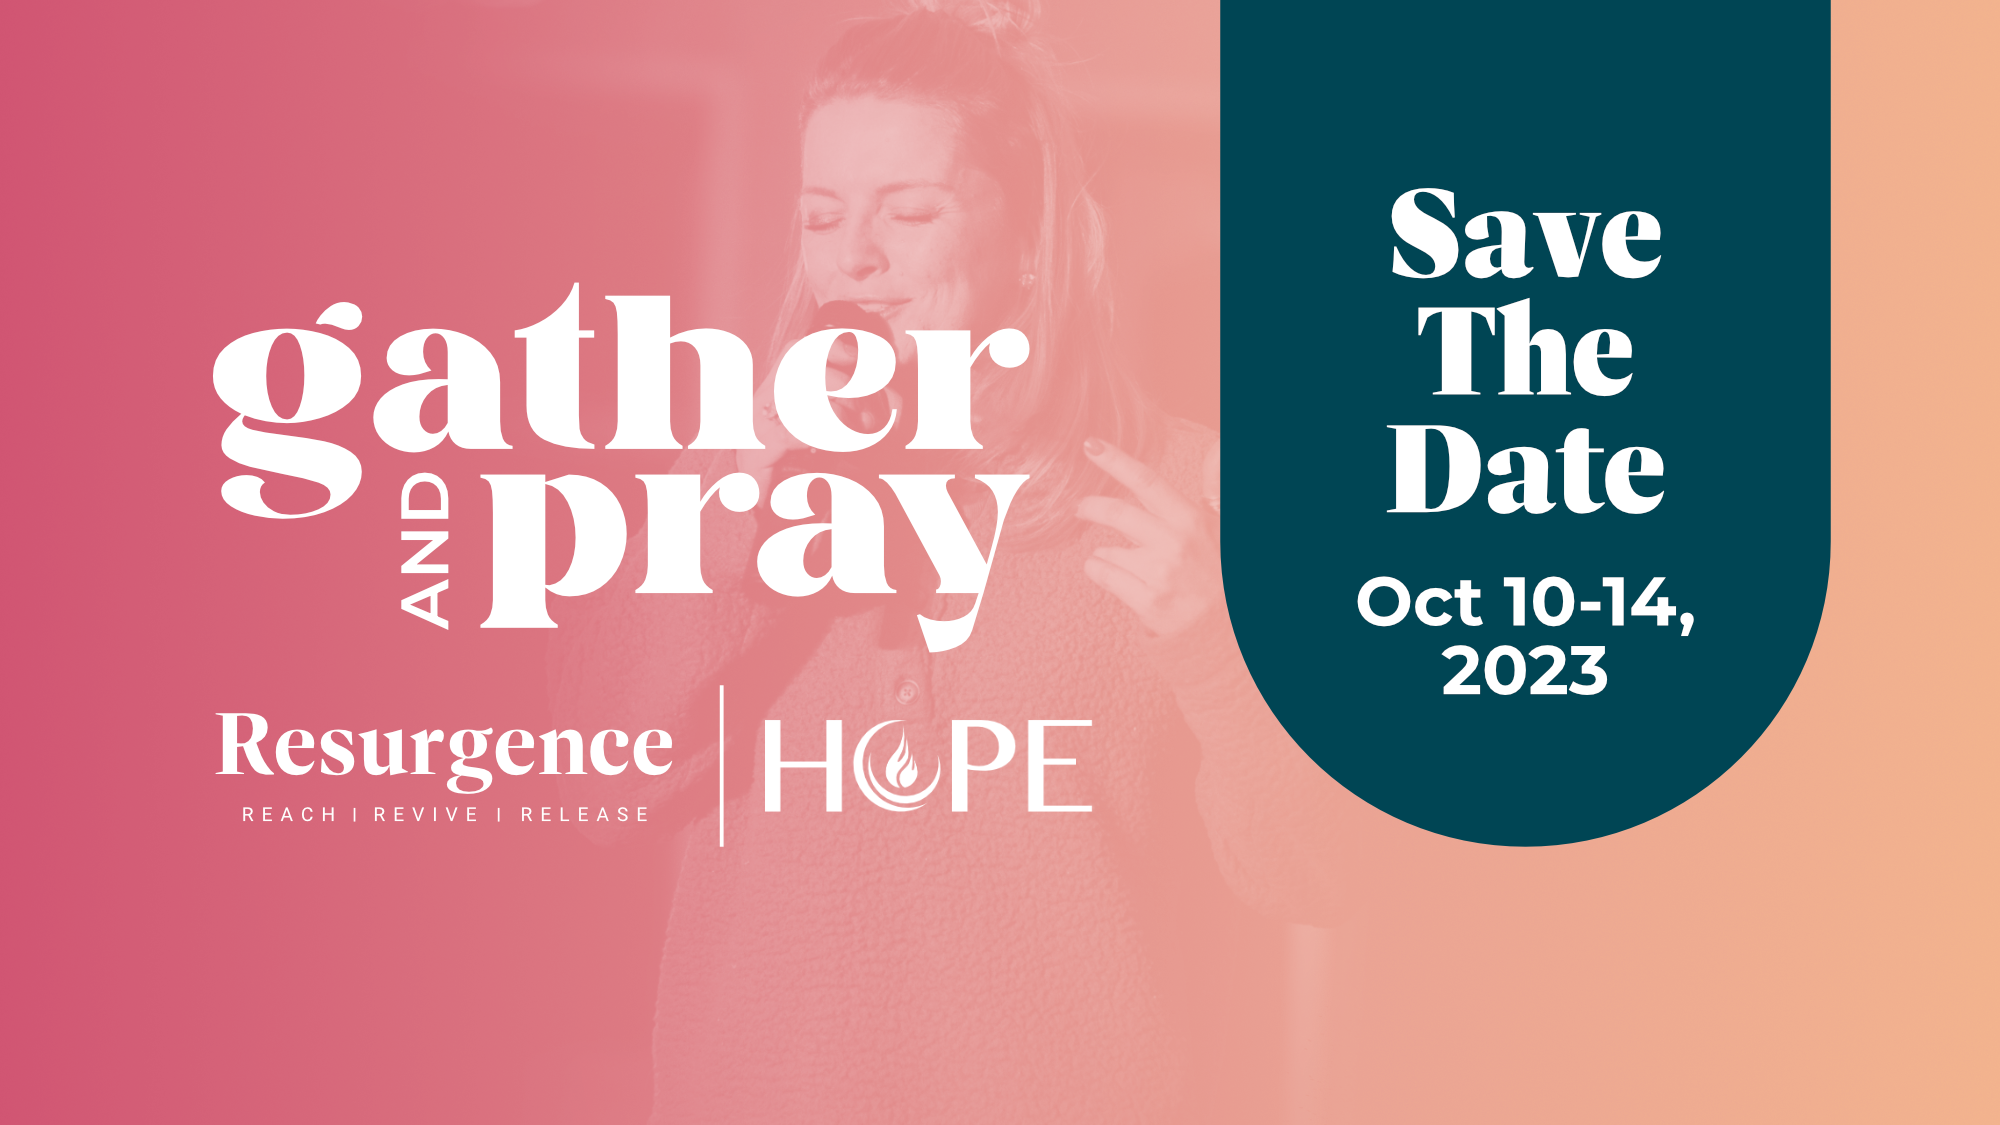 Oct. 10-14: Gather & Pray 2023